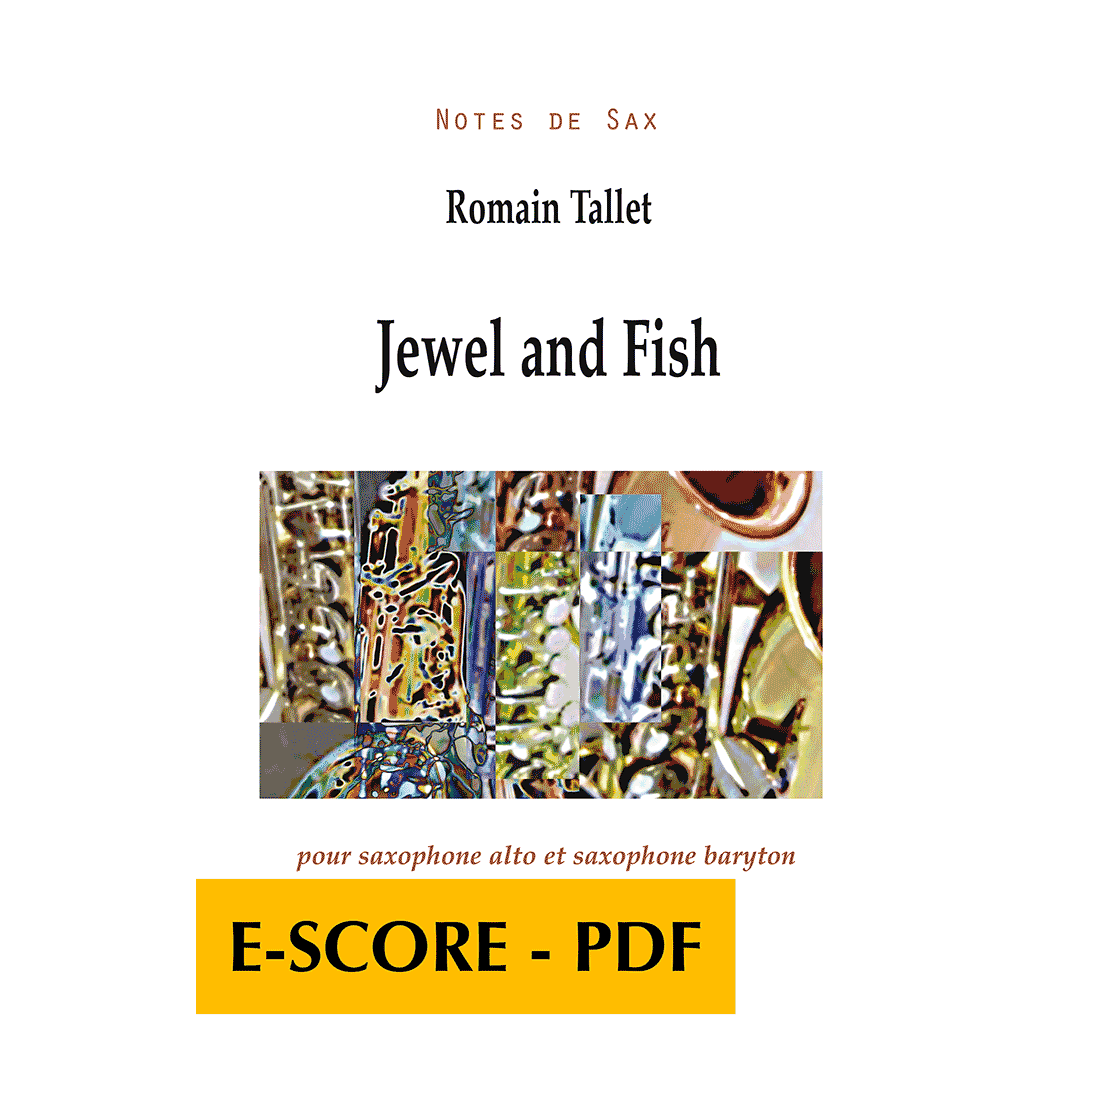 Jewel and Fish for alto saxophone and baritone saxophone - E-score PDF